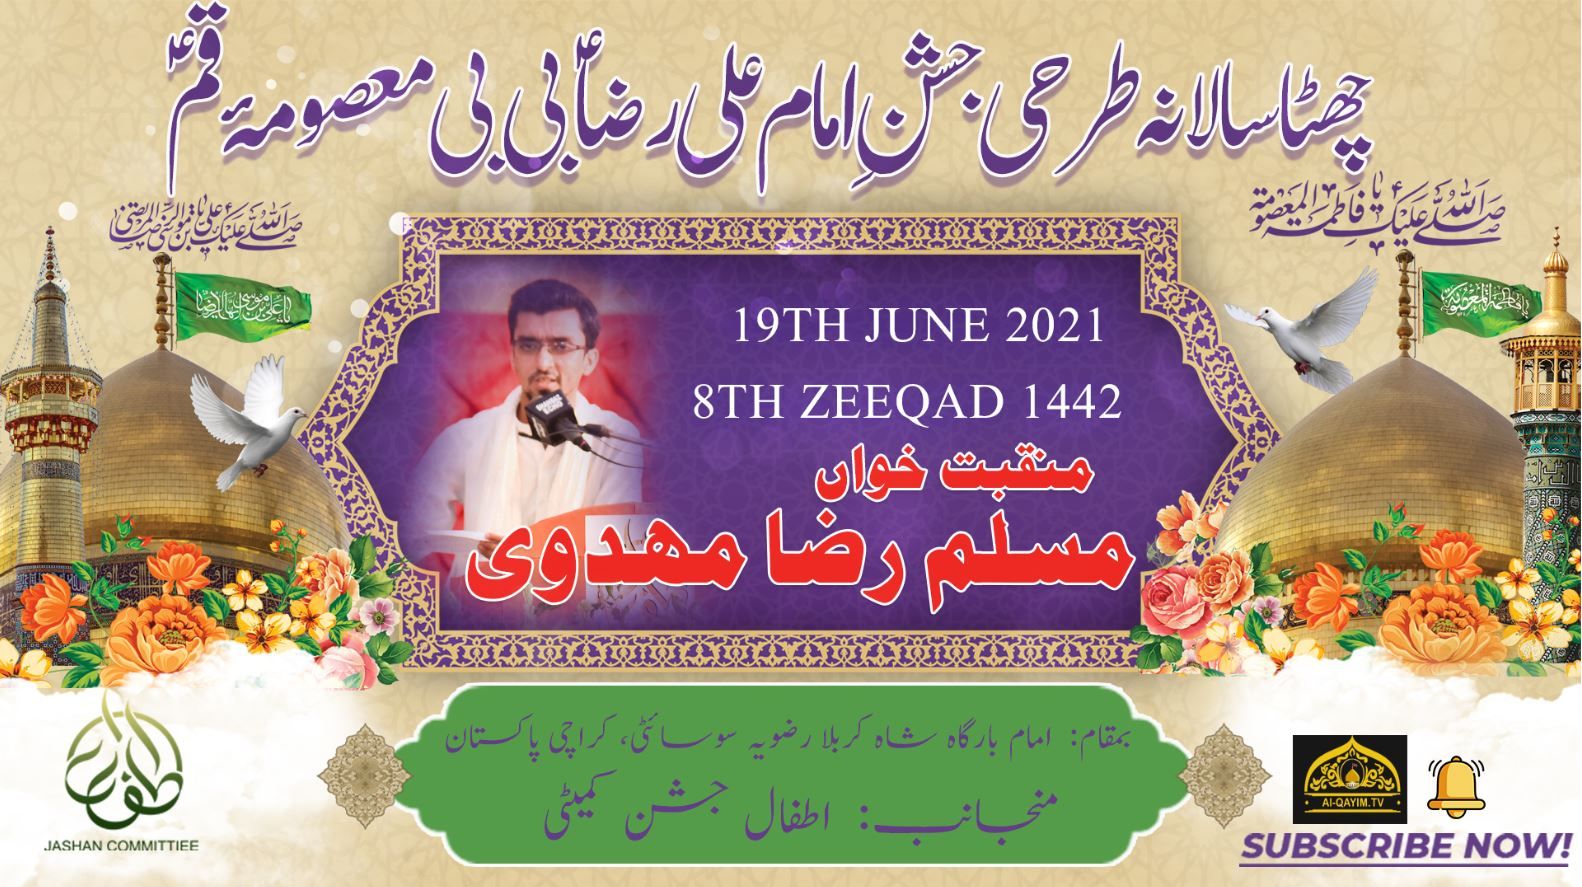 Manqabat | Muslim Raza Mehdavi | Jashan Bibi Masooma & Imam Ali Raza - 19 June 2021 Rizvia, Karachi